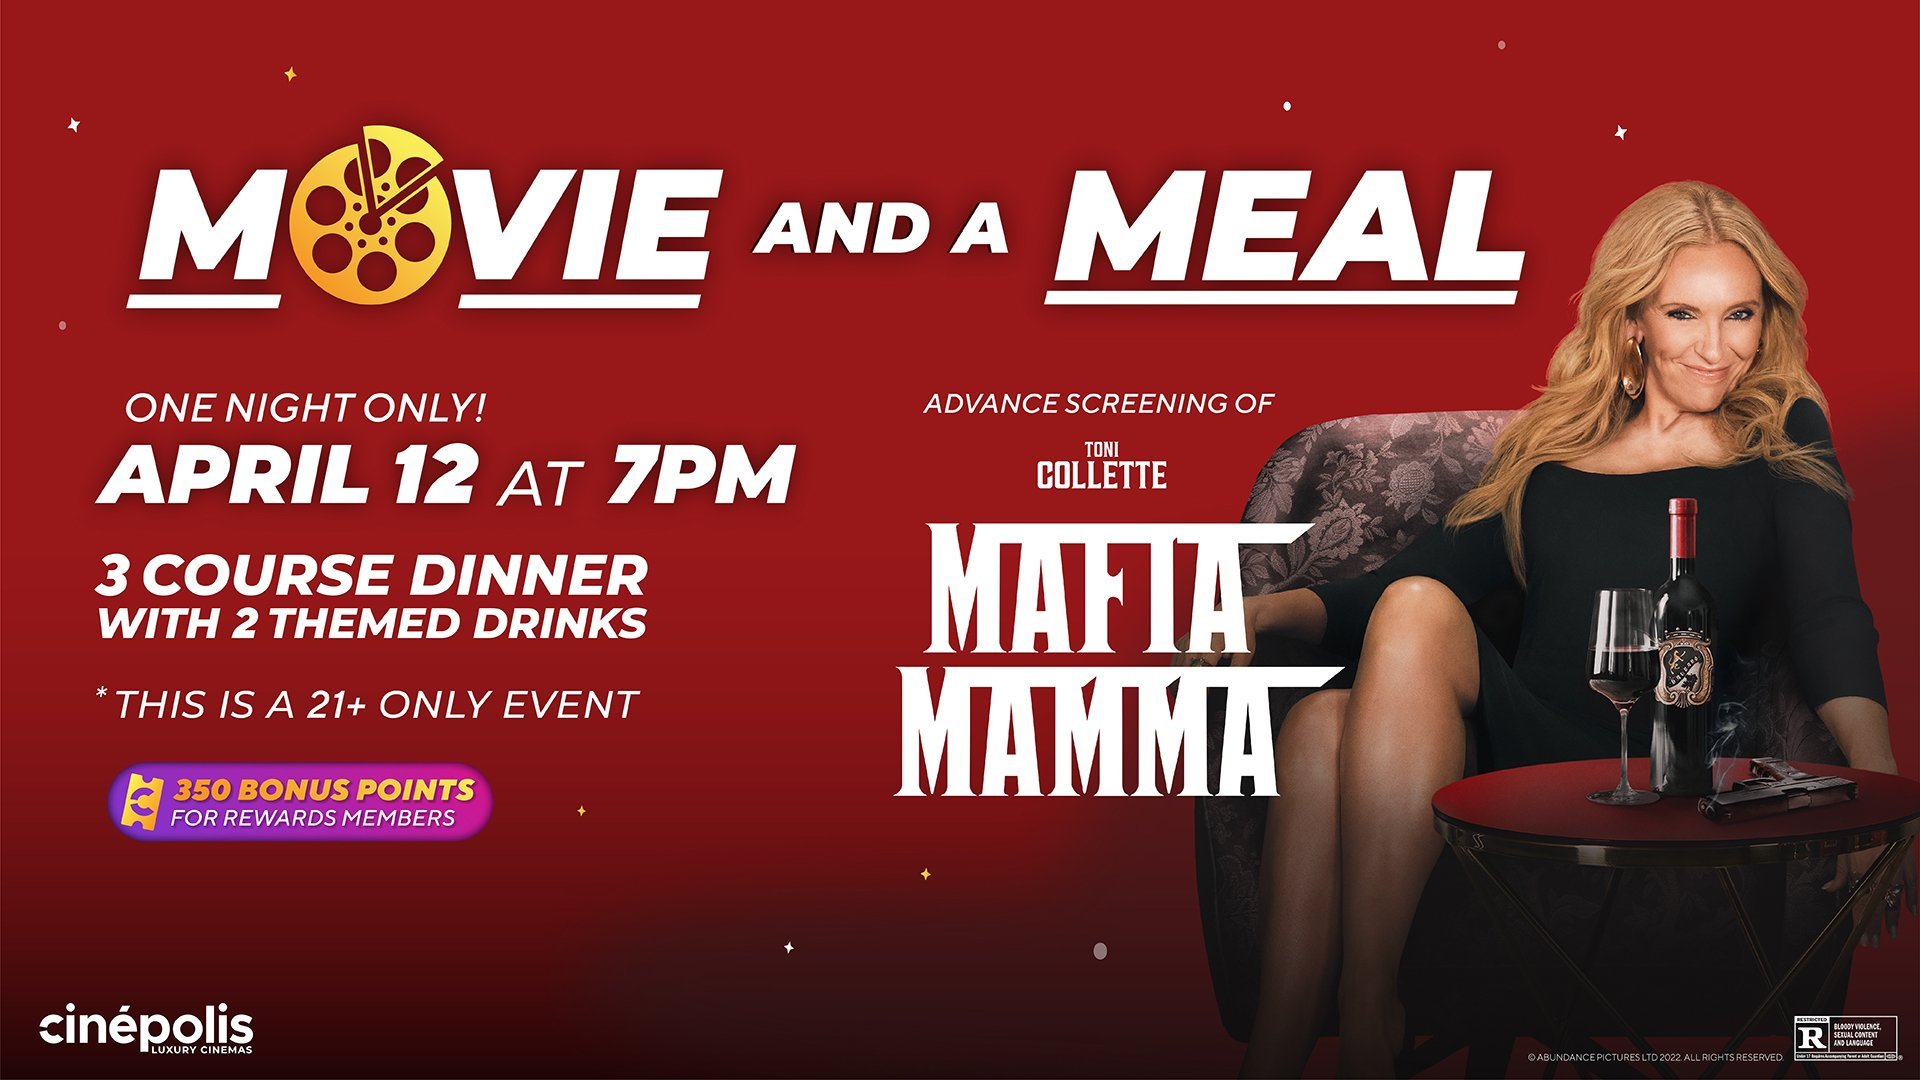 Mafia Mamma Movie and a Meal Advance Screening at Cinepolis 